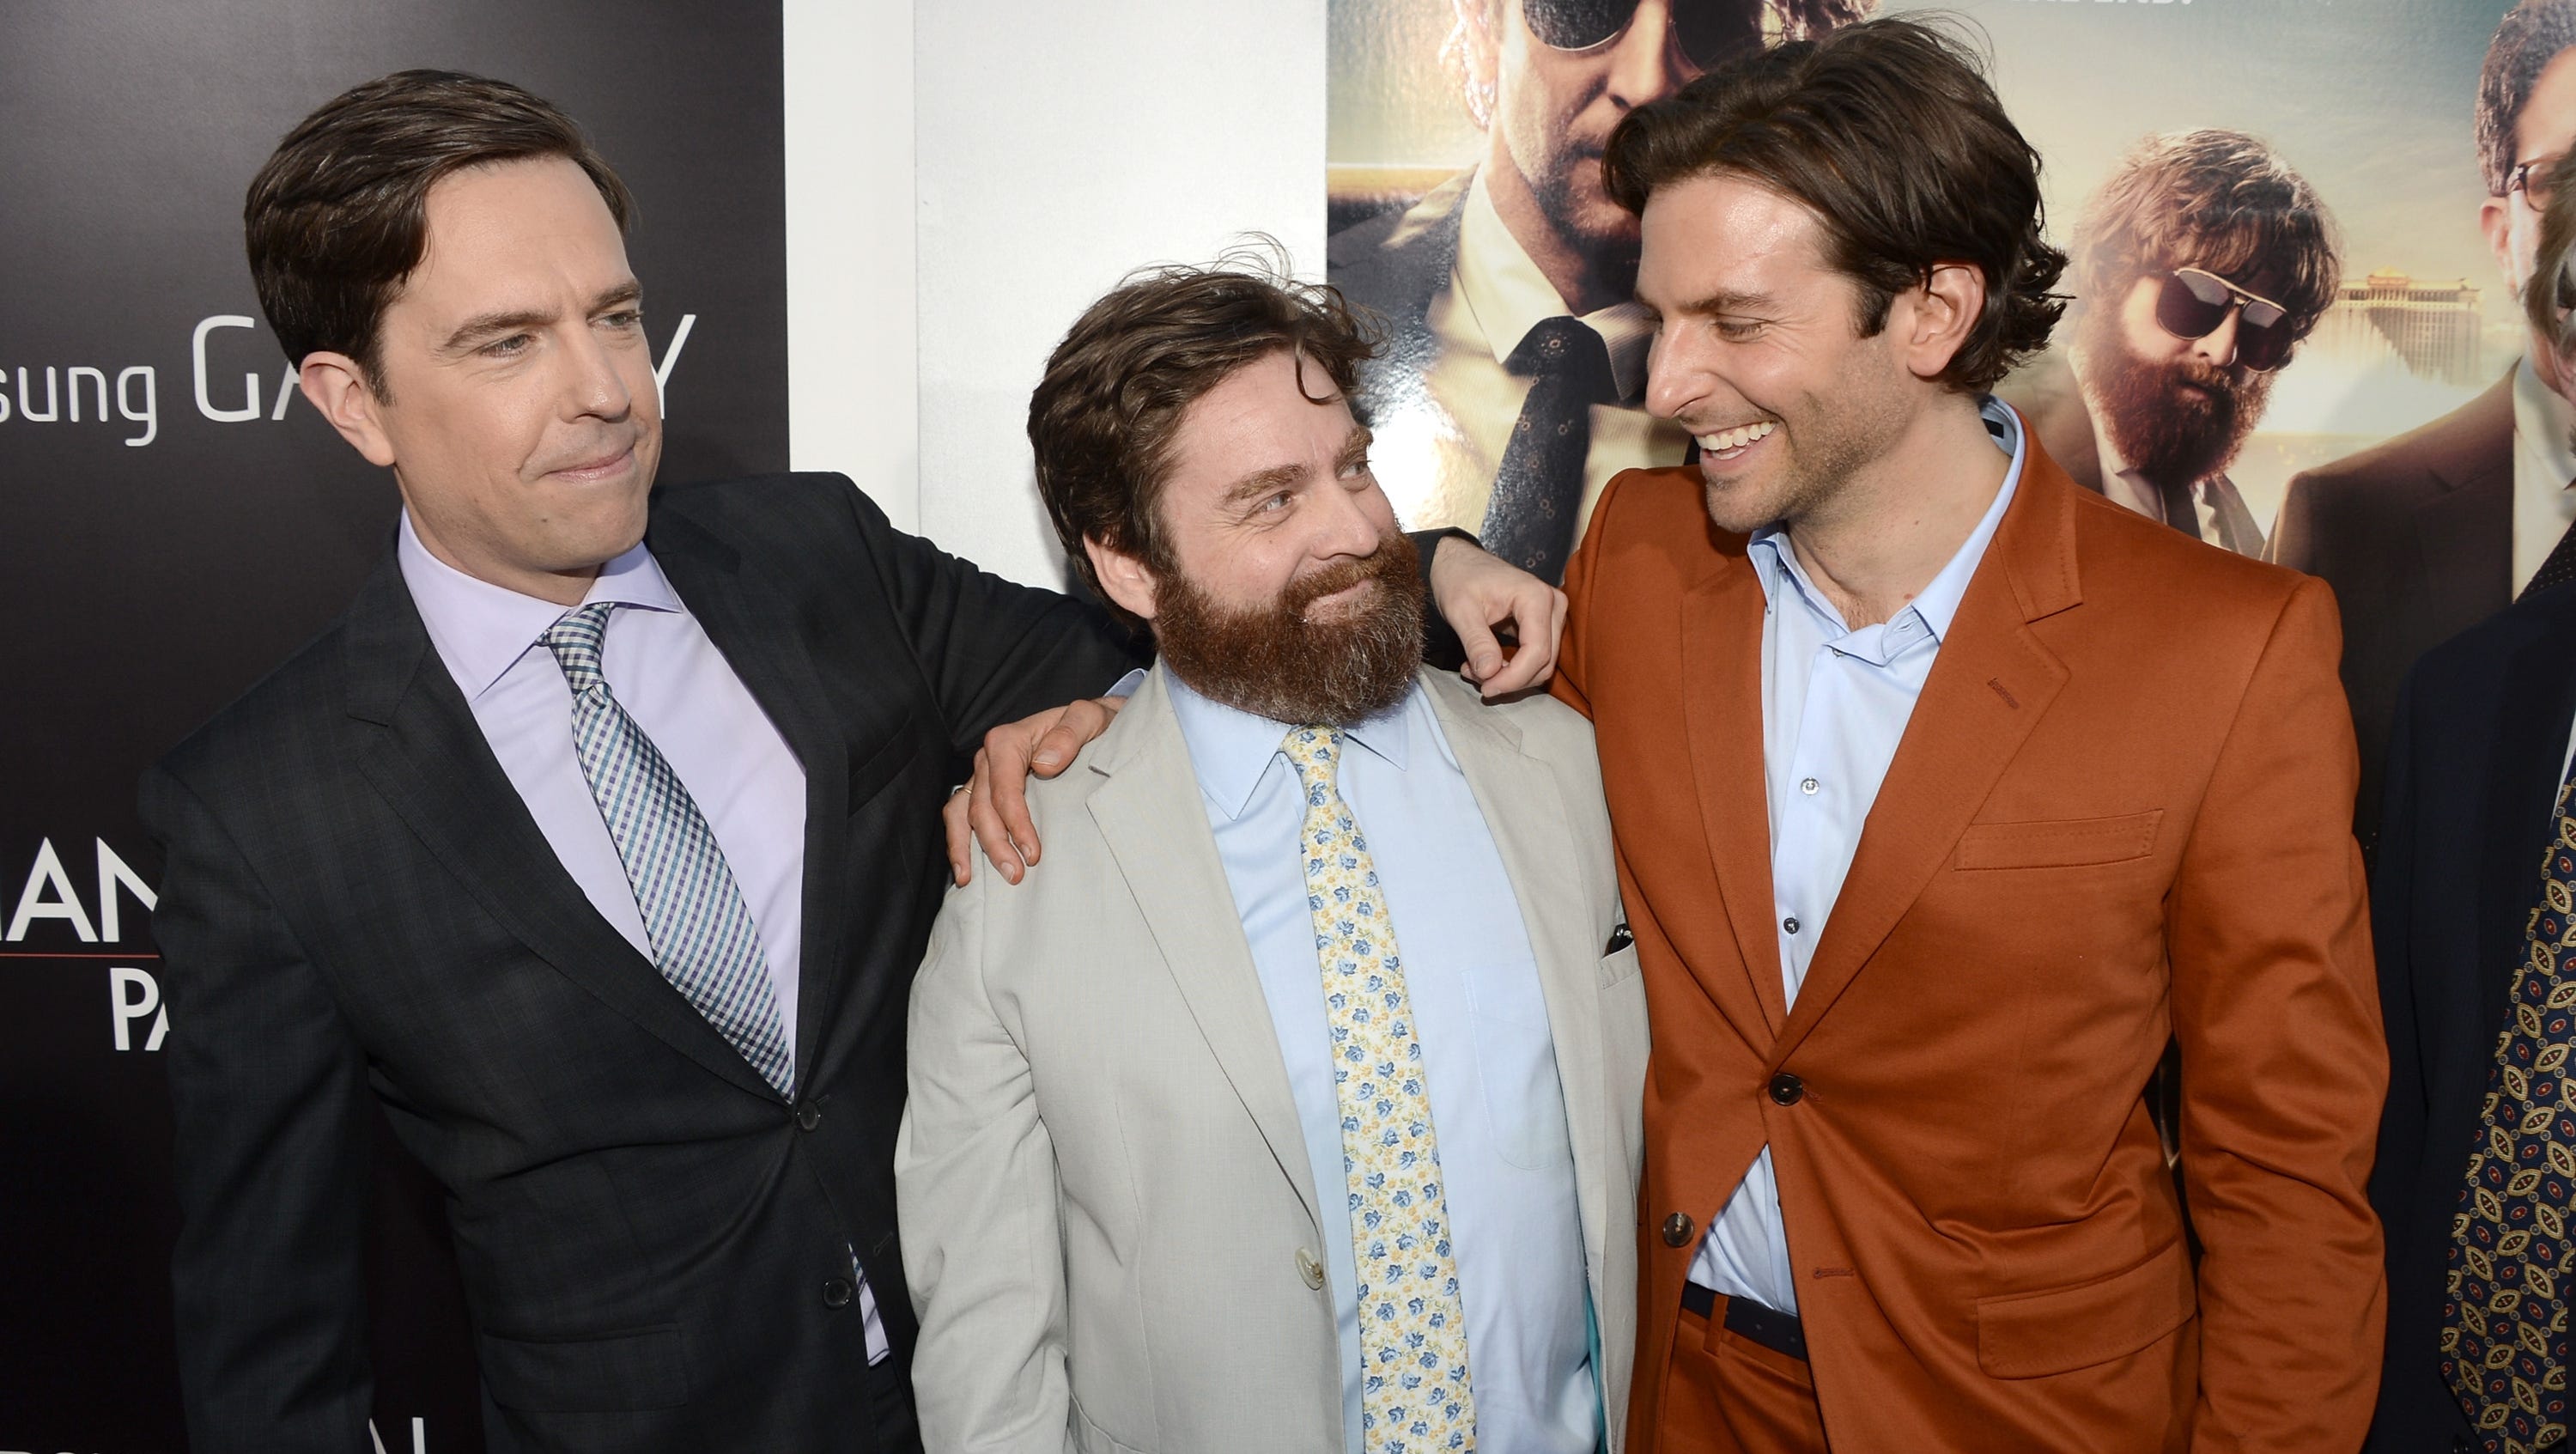 Bradley Cooper Hangover 3 Premiere Is Bittersweet. 